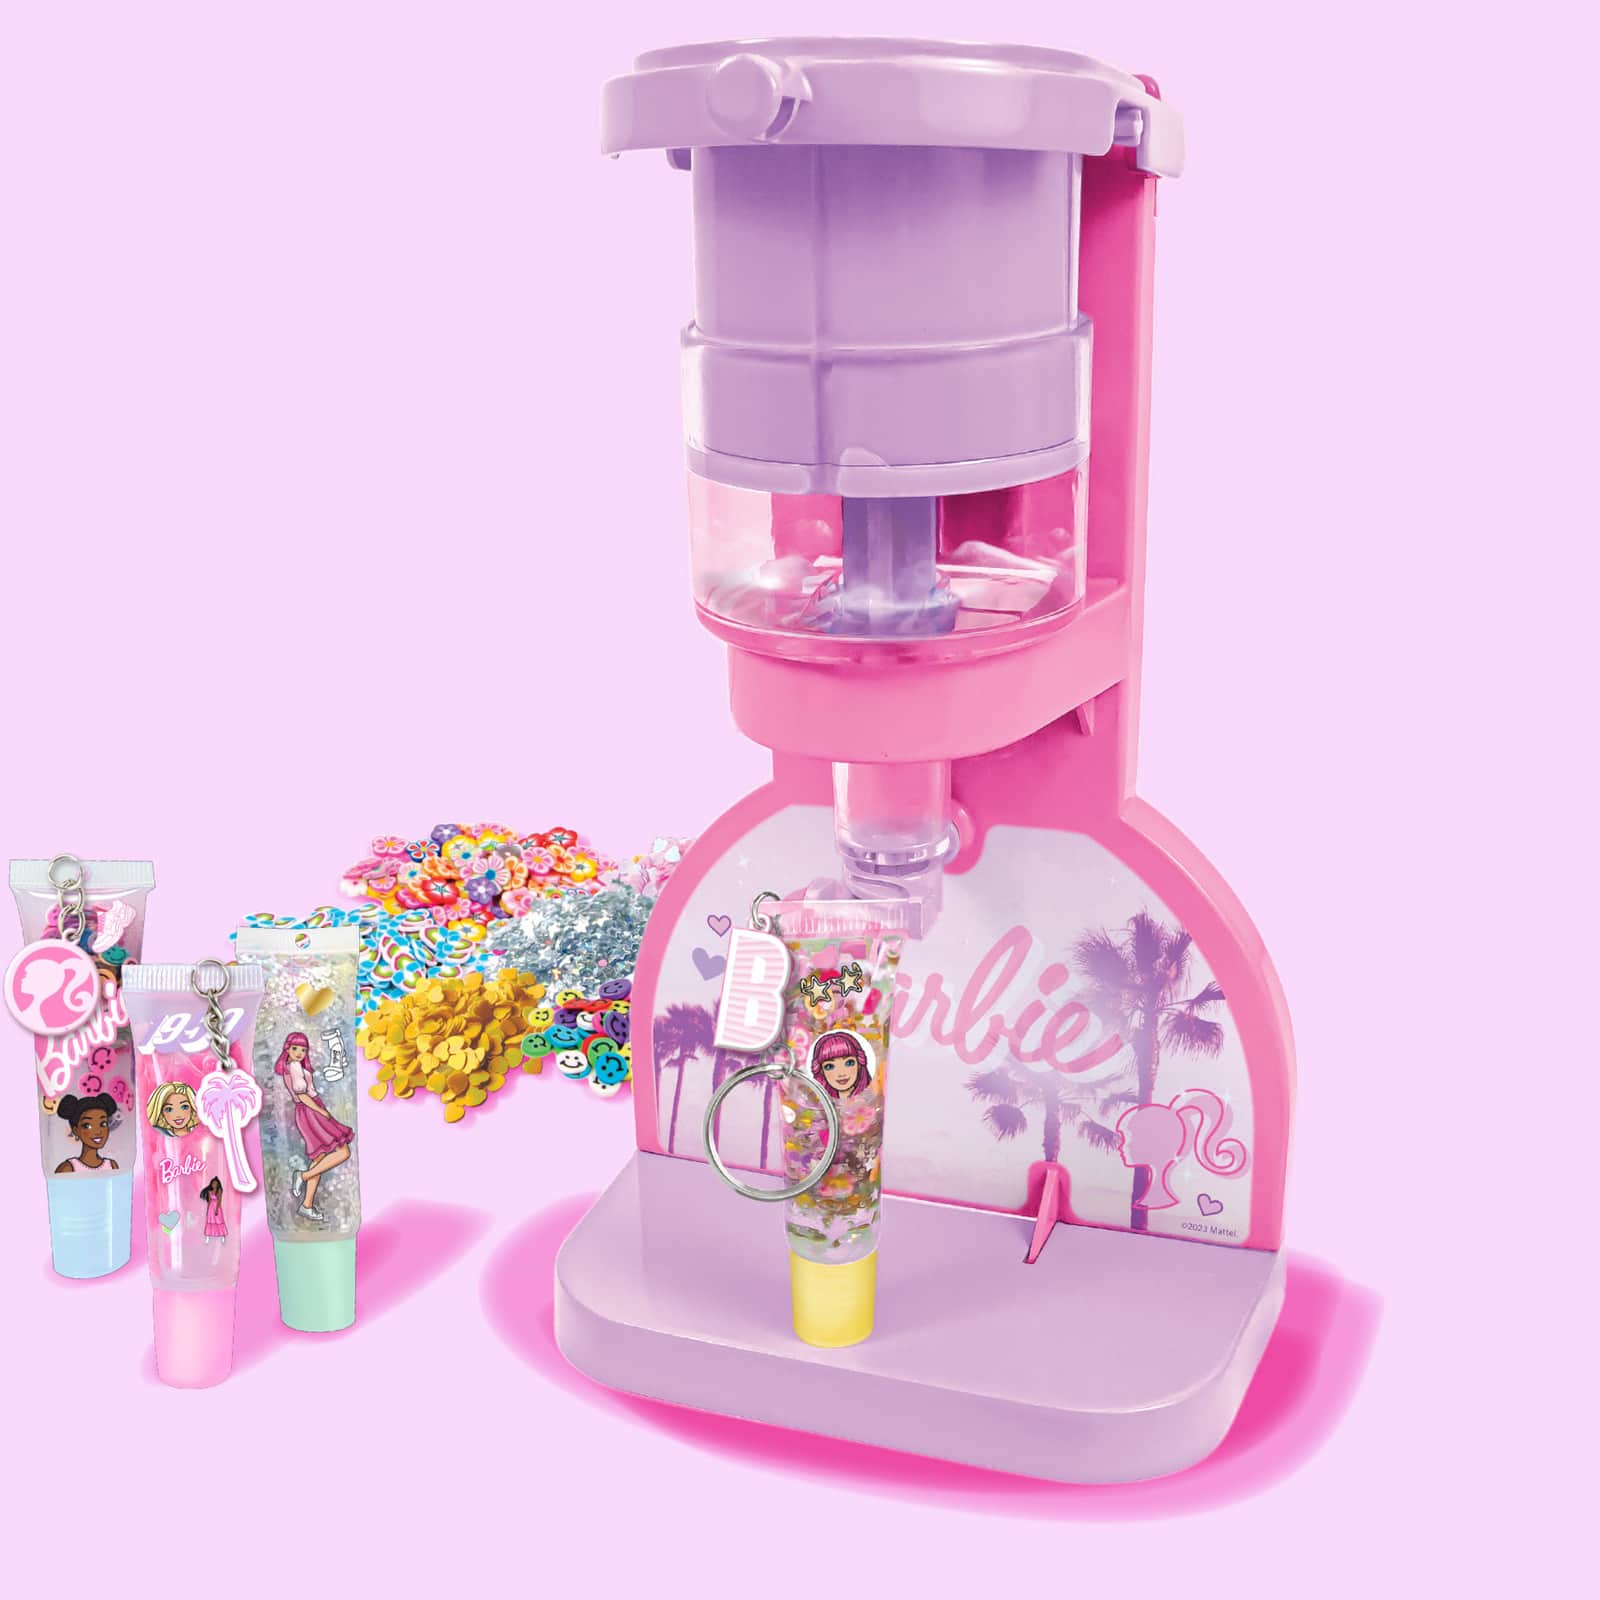 Barbie&#x2122; Sweet Shop Lip Gloss Kit